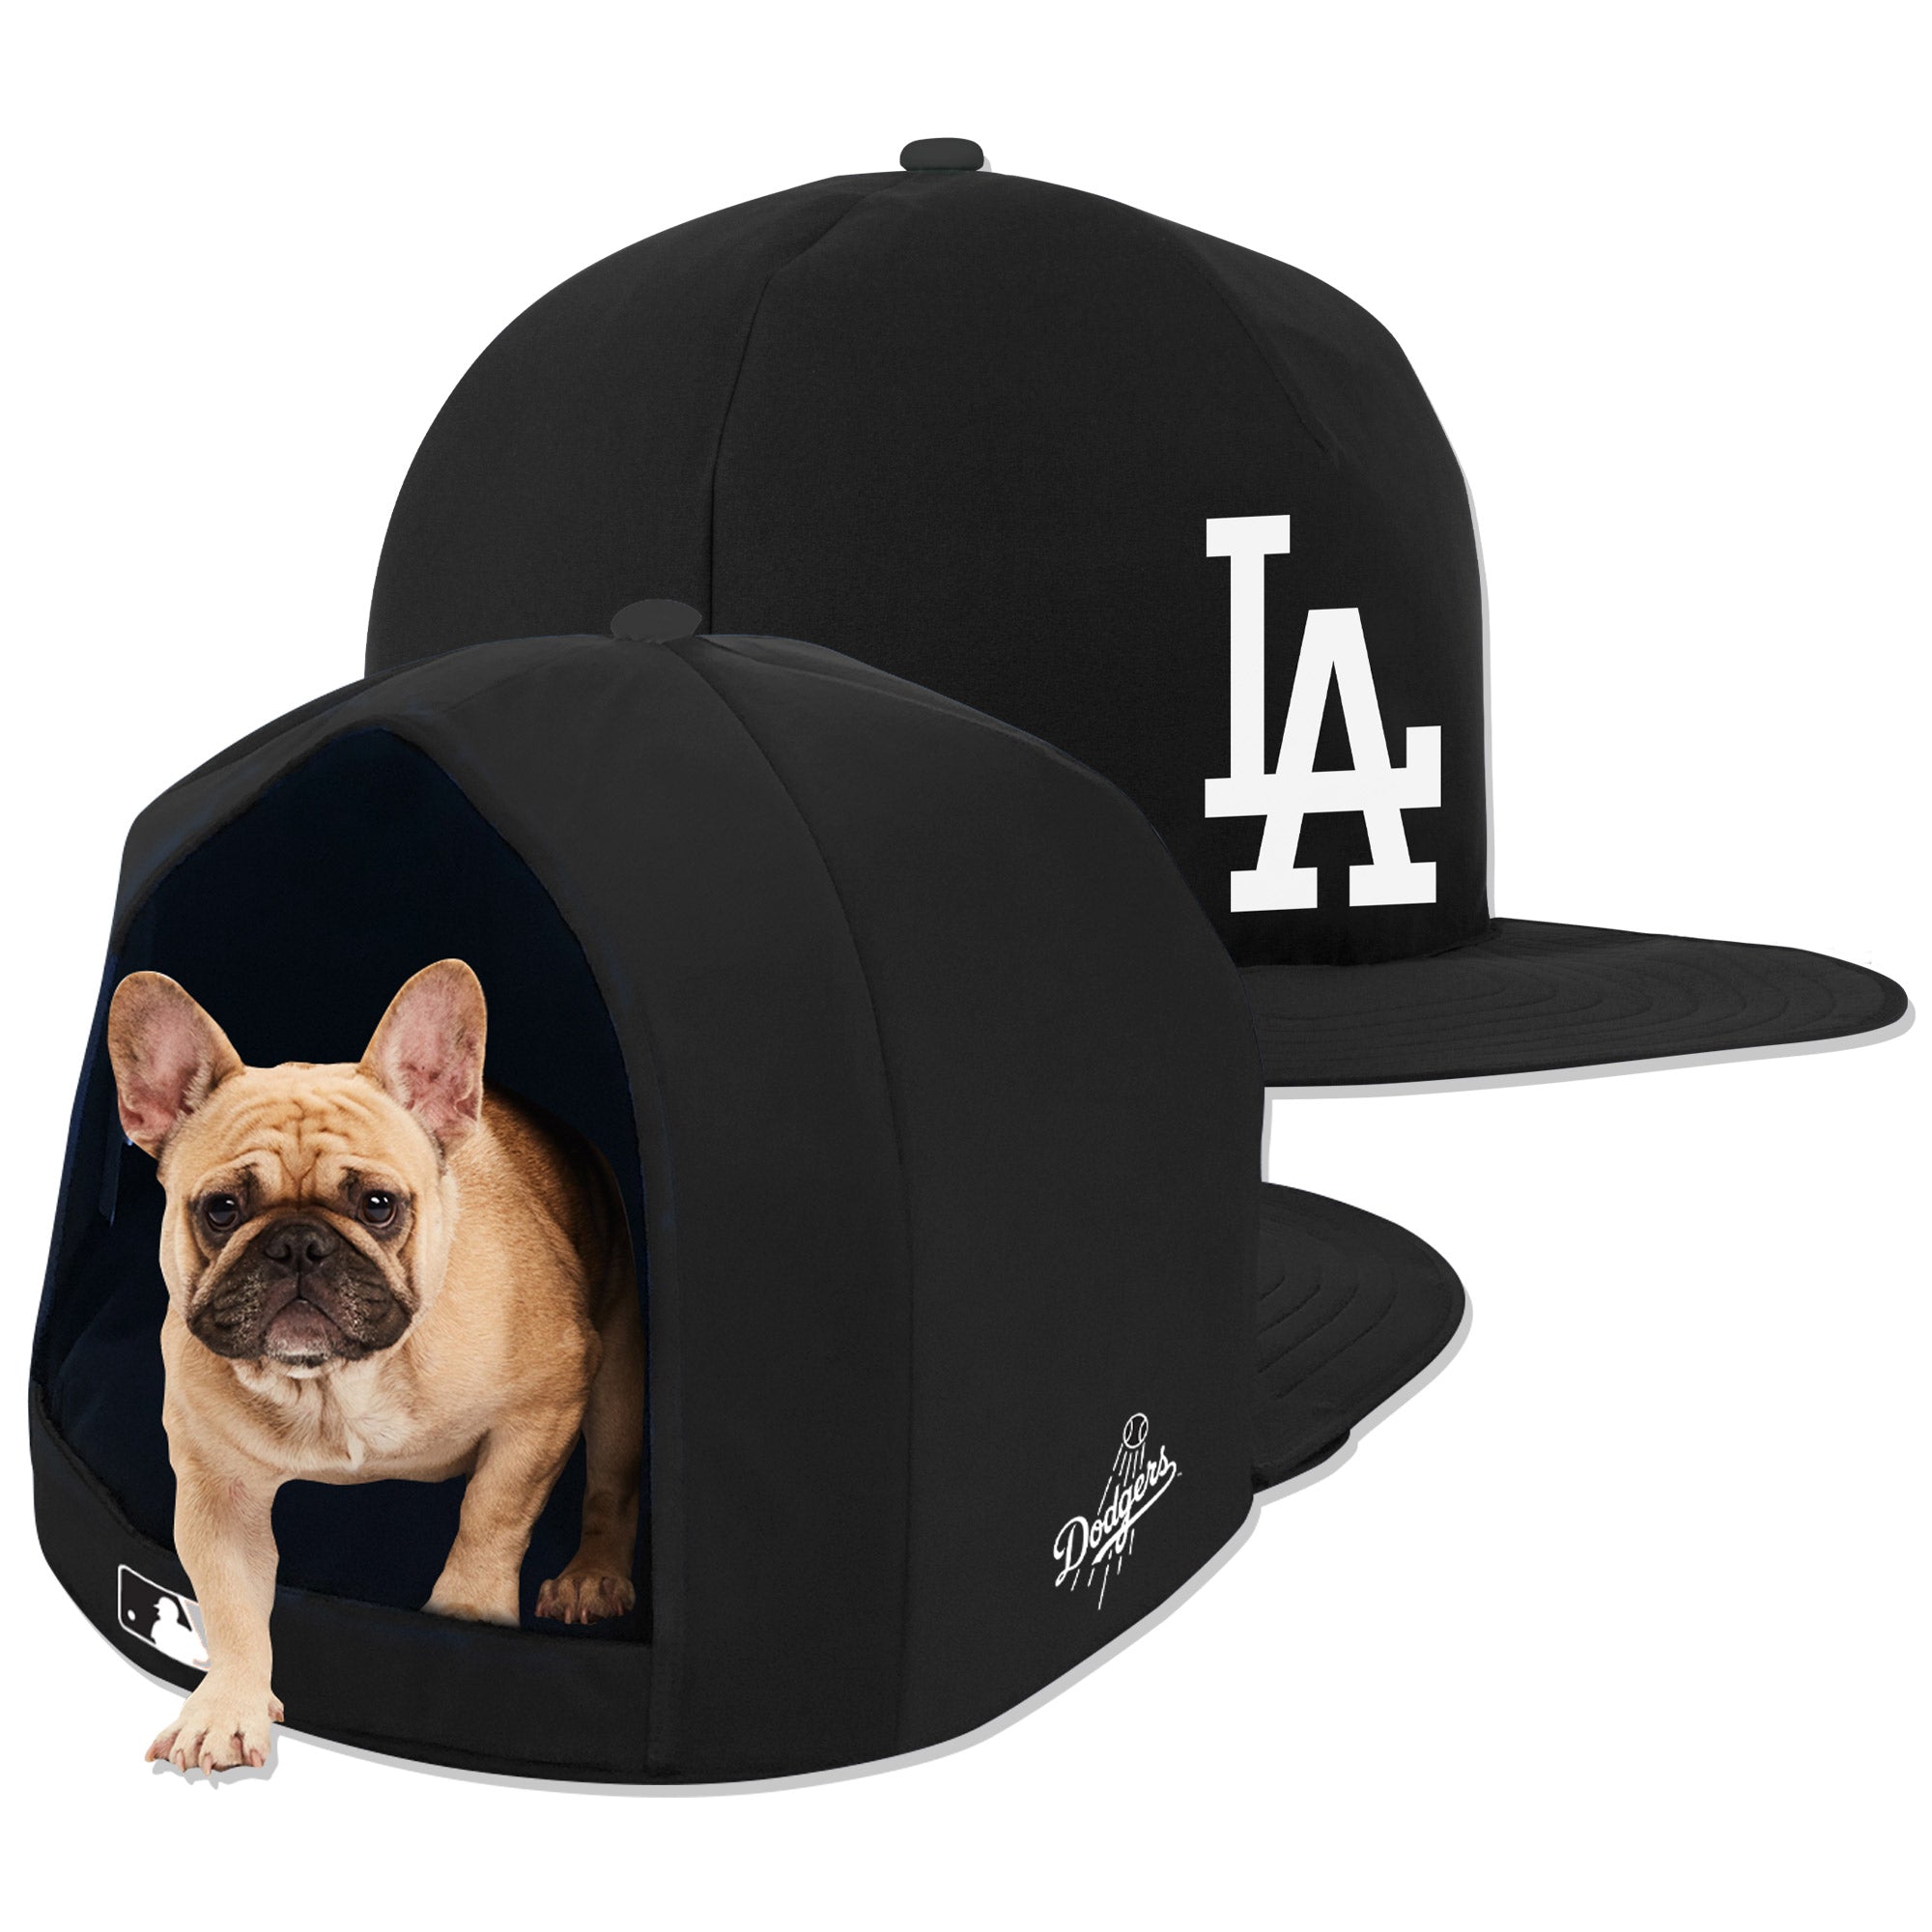  MLB PET Bed - Los Angeles Dodgers Soft & Cozy Plush